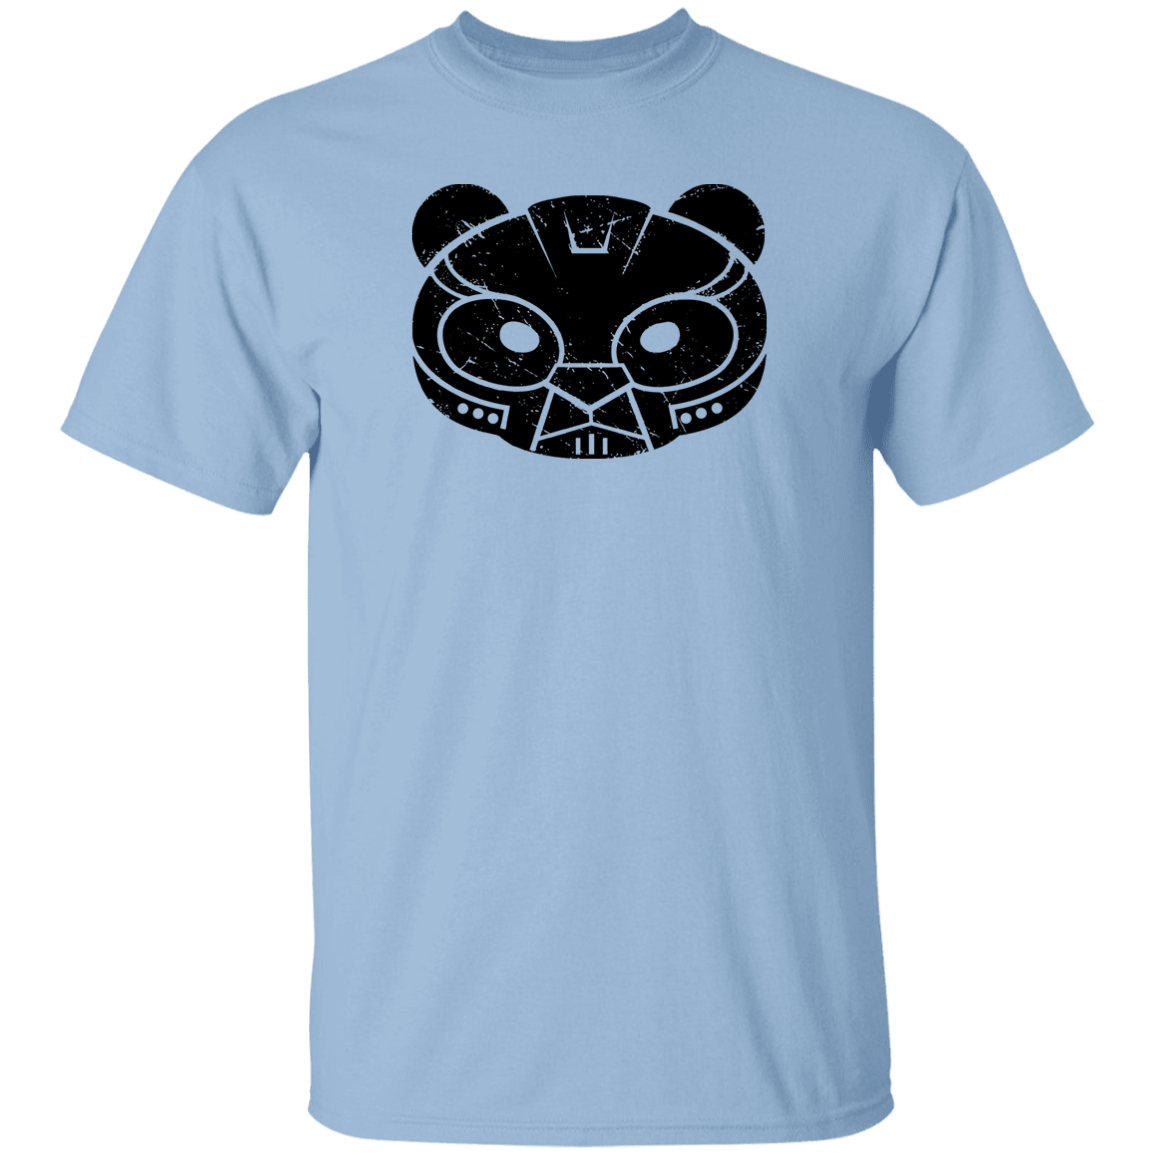 Black Distressed Emblem T-Shirt for Kids (Bear/Bear Company)